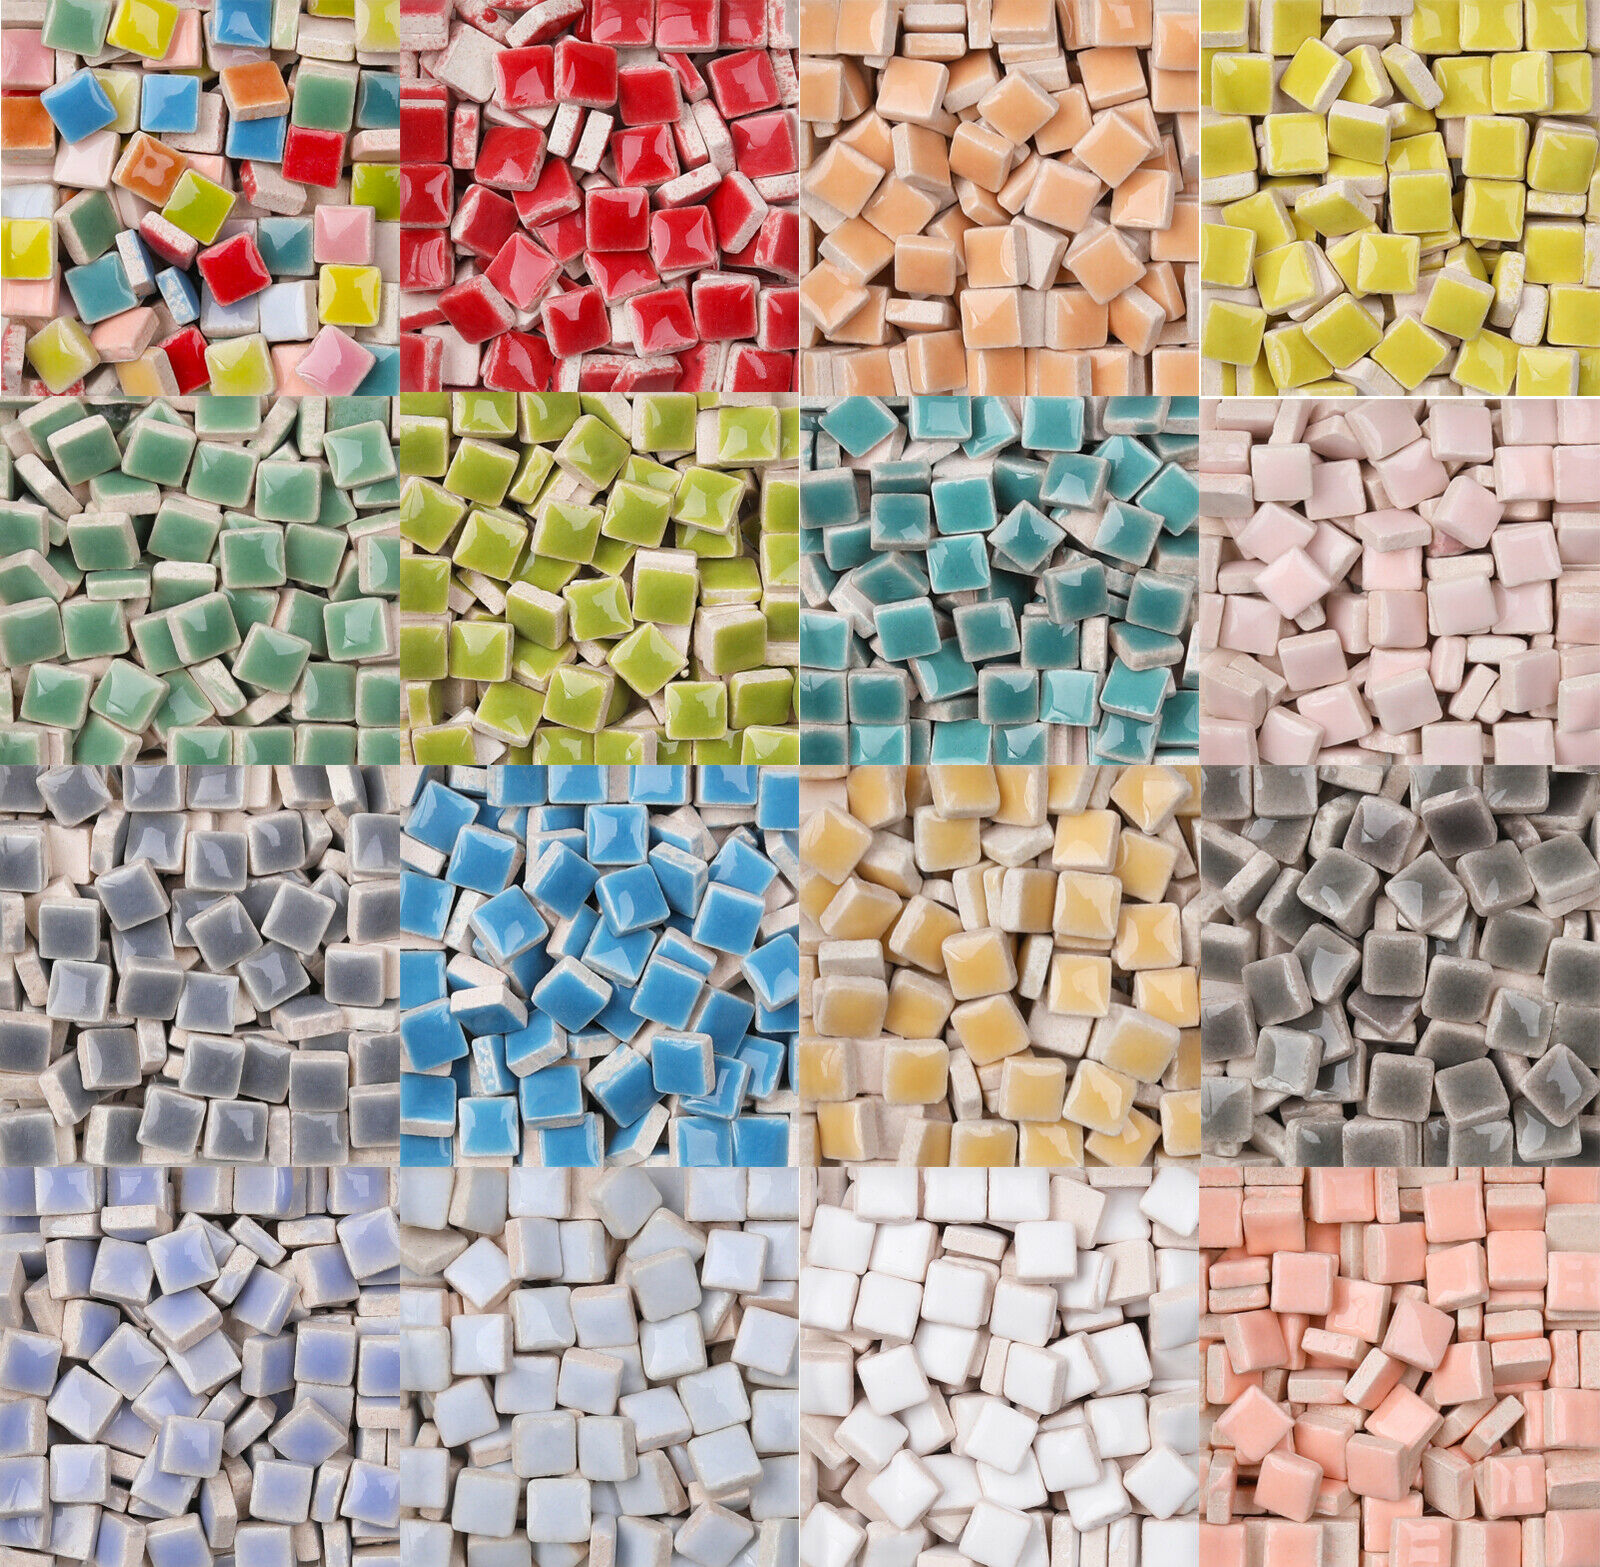 Super Micro Ceramic Mosaic Tiles Diy Hobbies Arts Mosaic Tiles For Crafts 250pcs